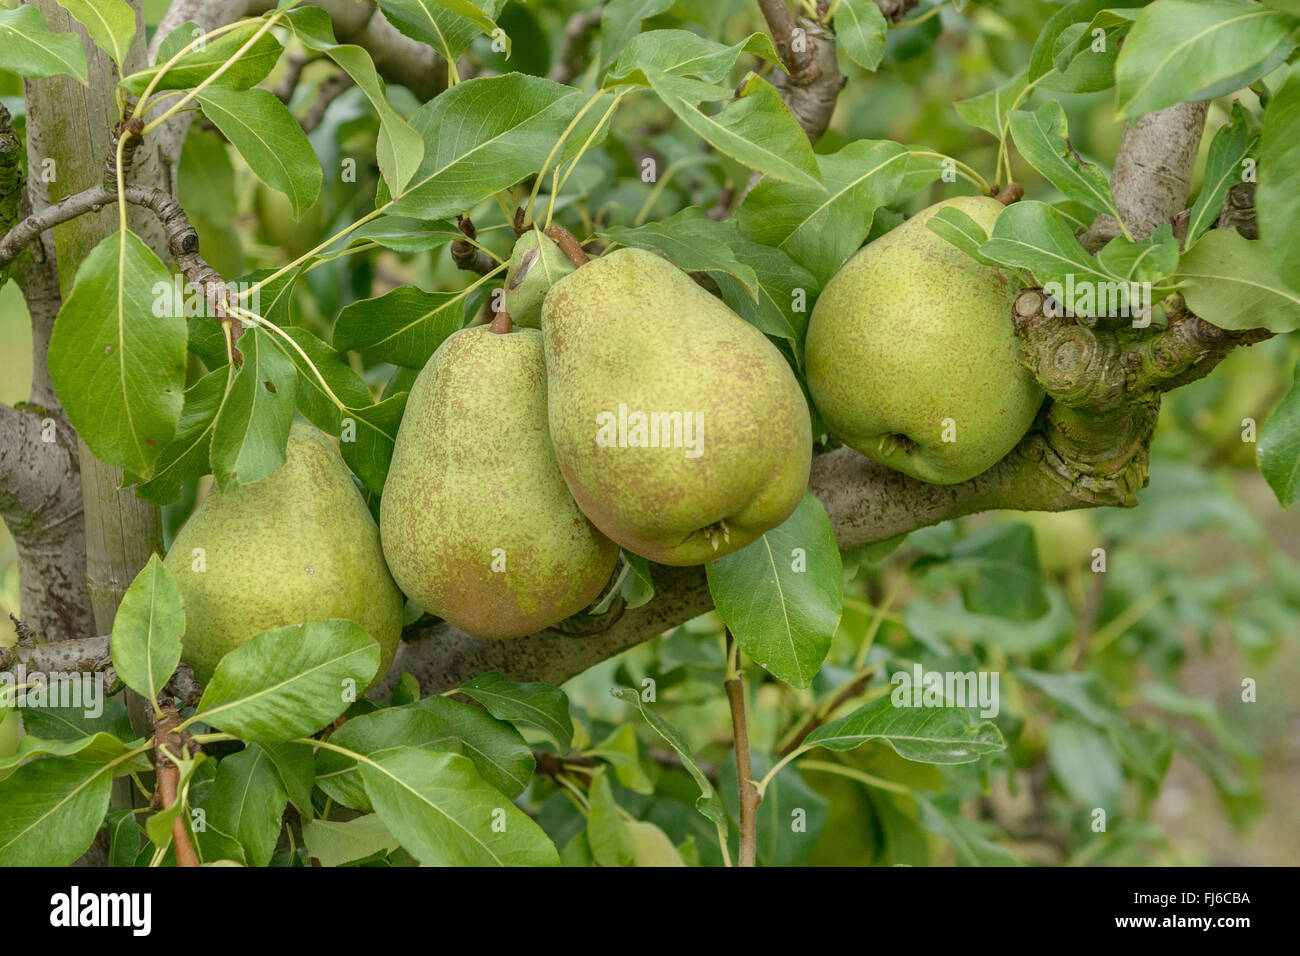 Common pear (Pyrus communis 'Jeanne d'Arc', Pyrus communis Jeanne d'Arc), pears on a tree, cultivar Jeanne d'Arc, Germany Stock Photo